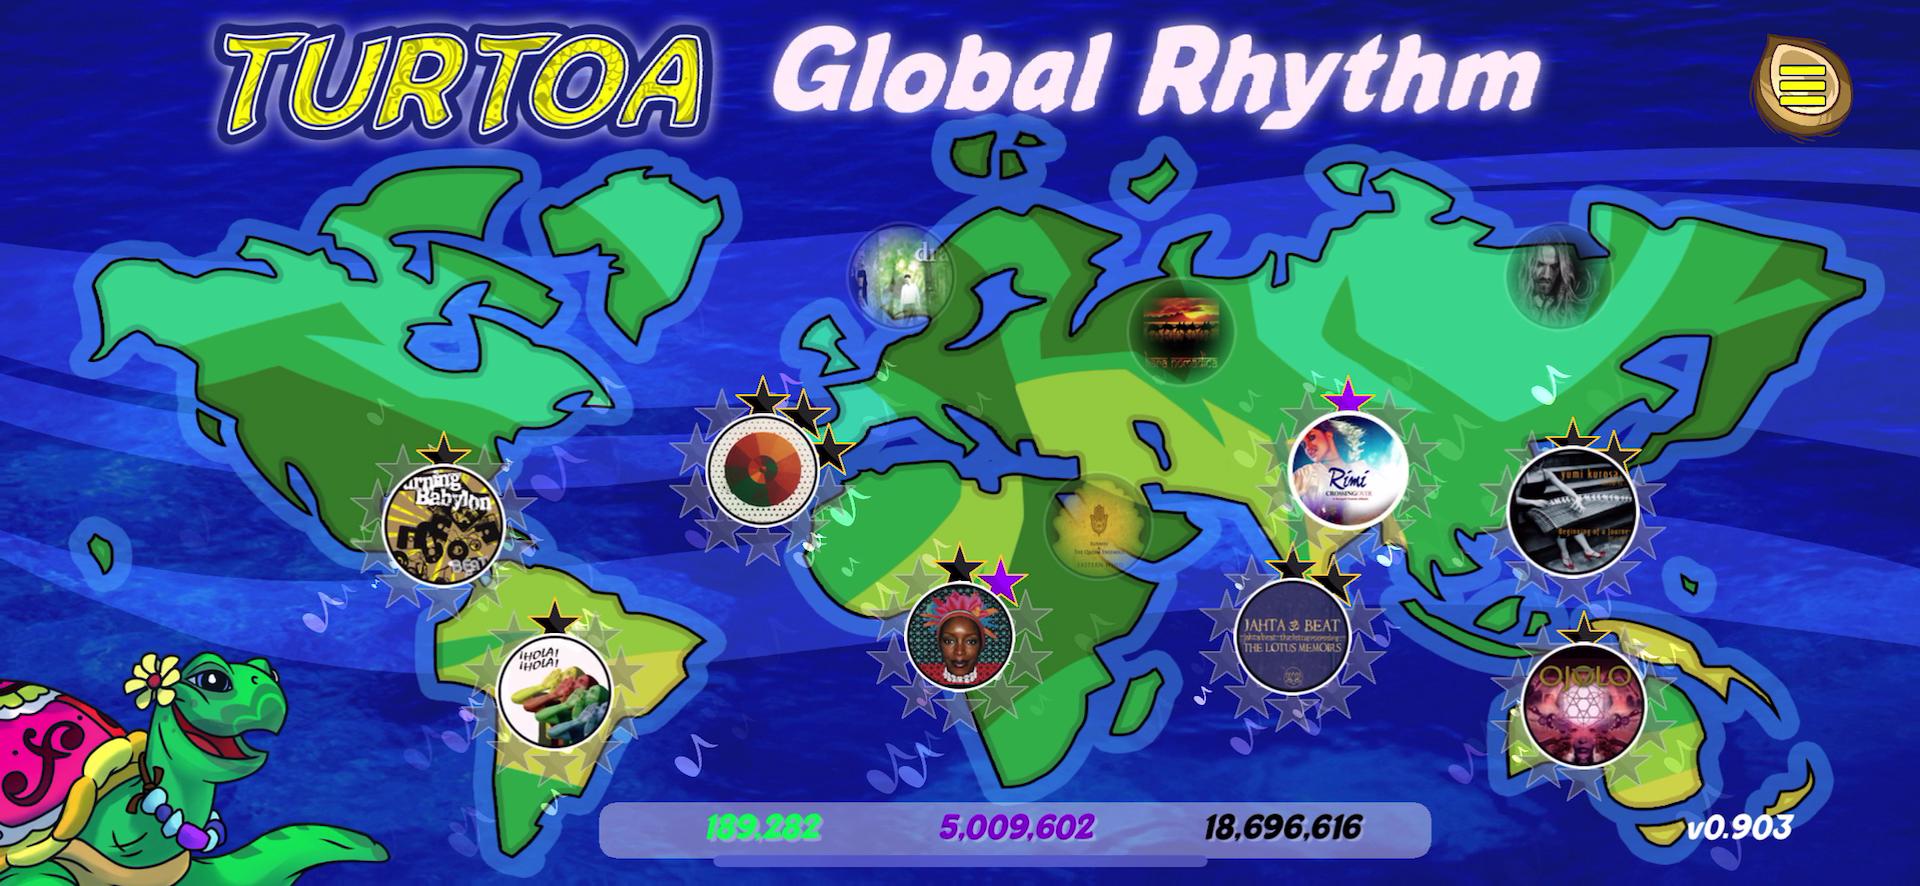 Turtoa Global Rhythm - Music Meditation Game 1.2 Screenshot 6